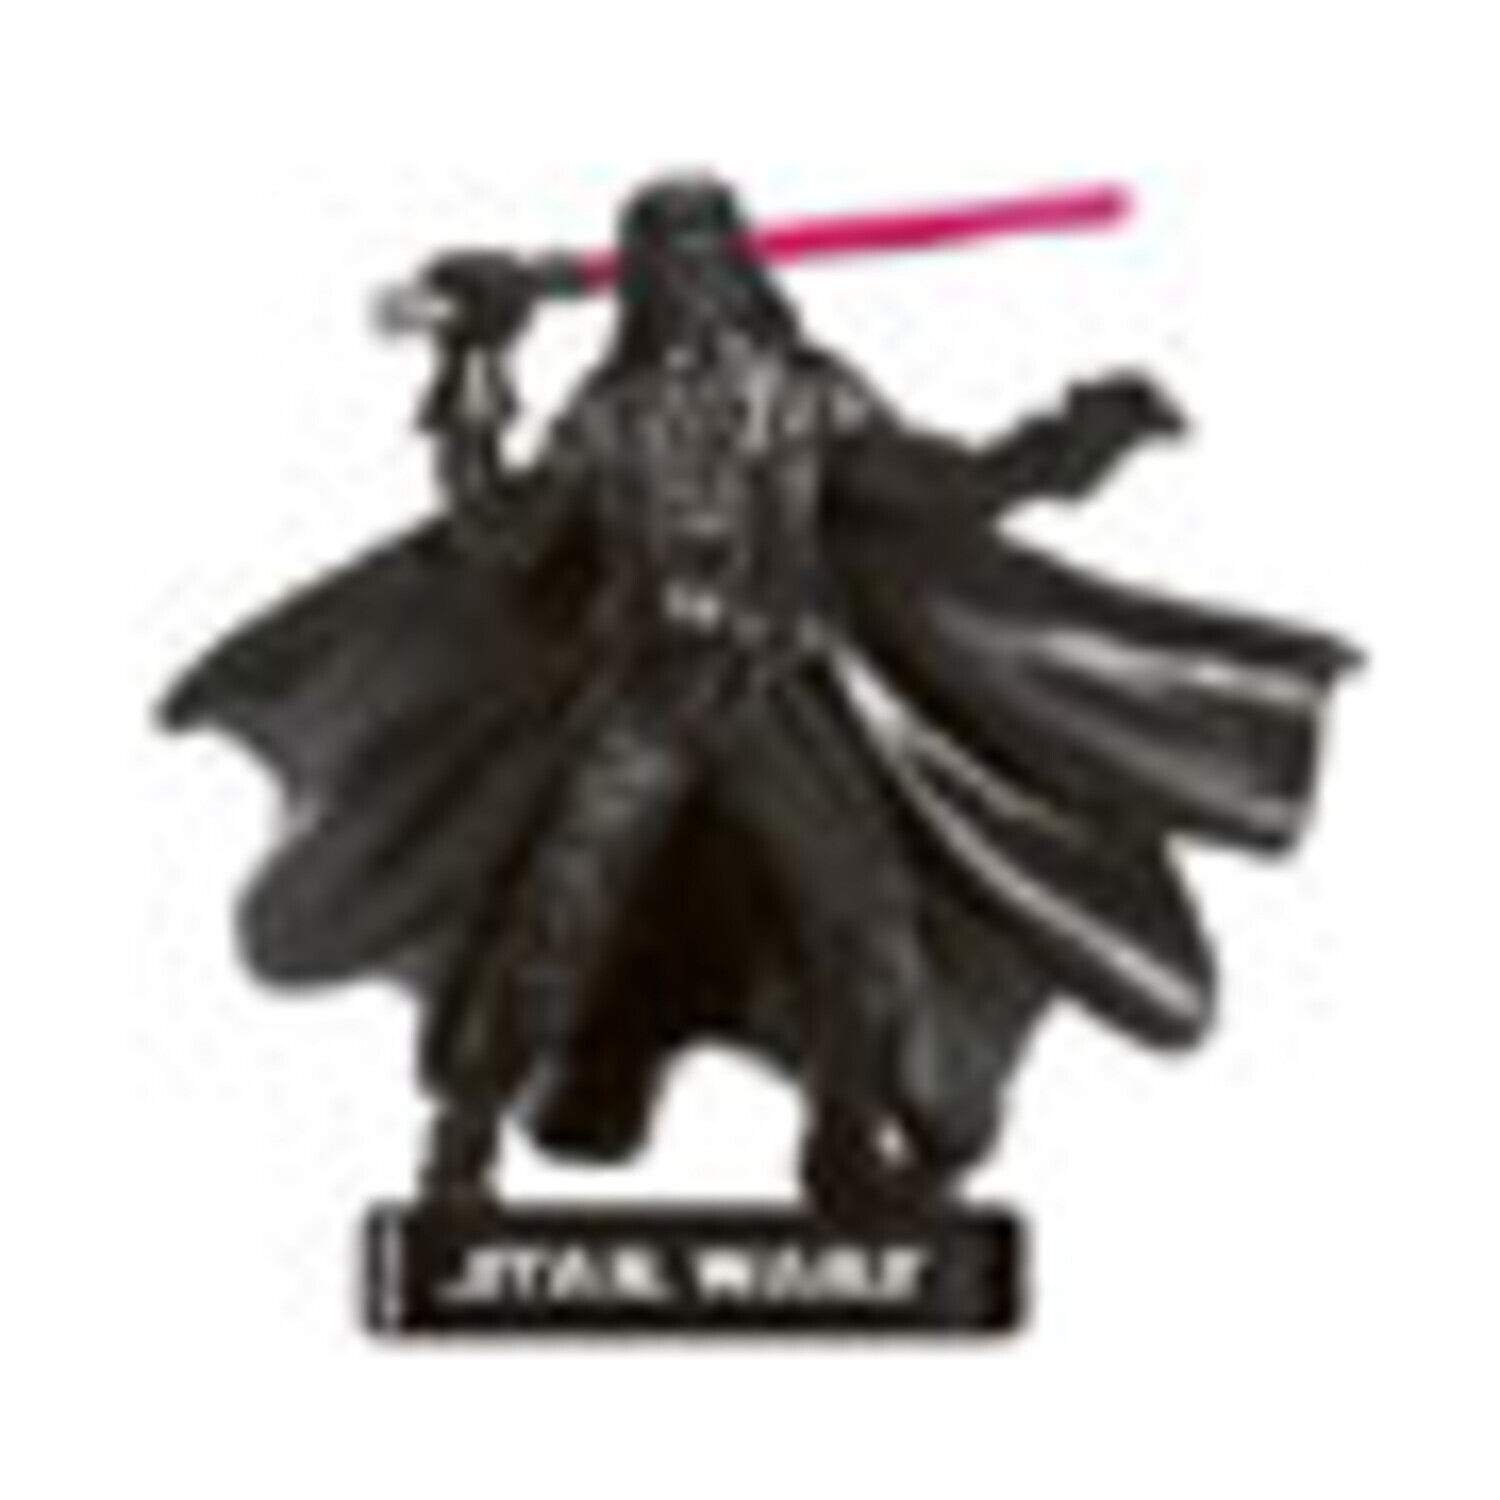 Wotc Star Wars Minis Alliance & Empire  Darth Vader - Imperial Commander (v Nm